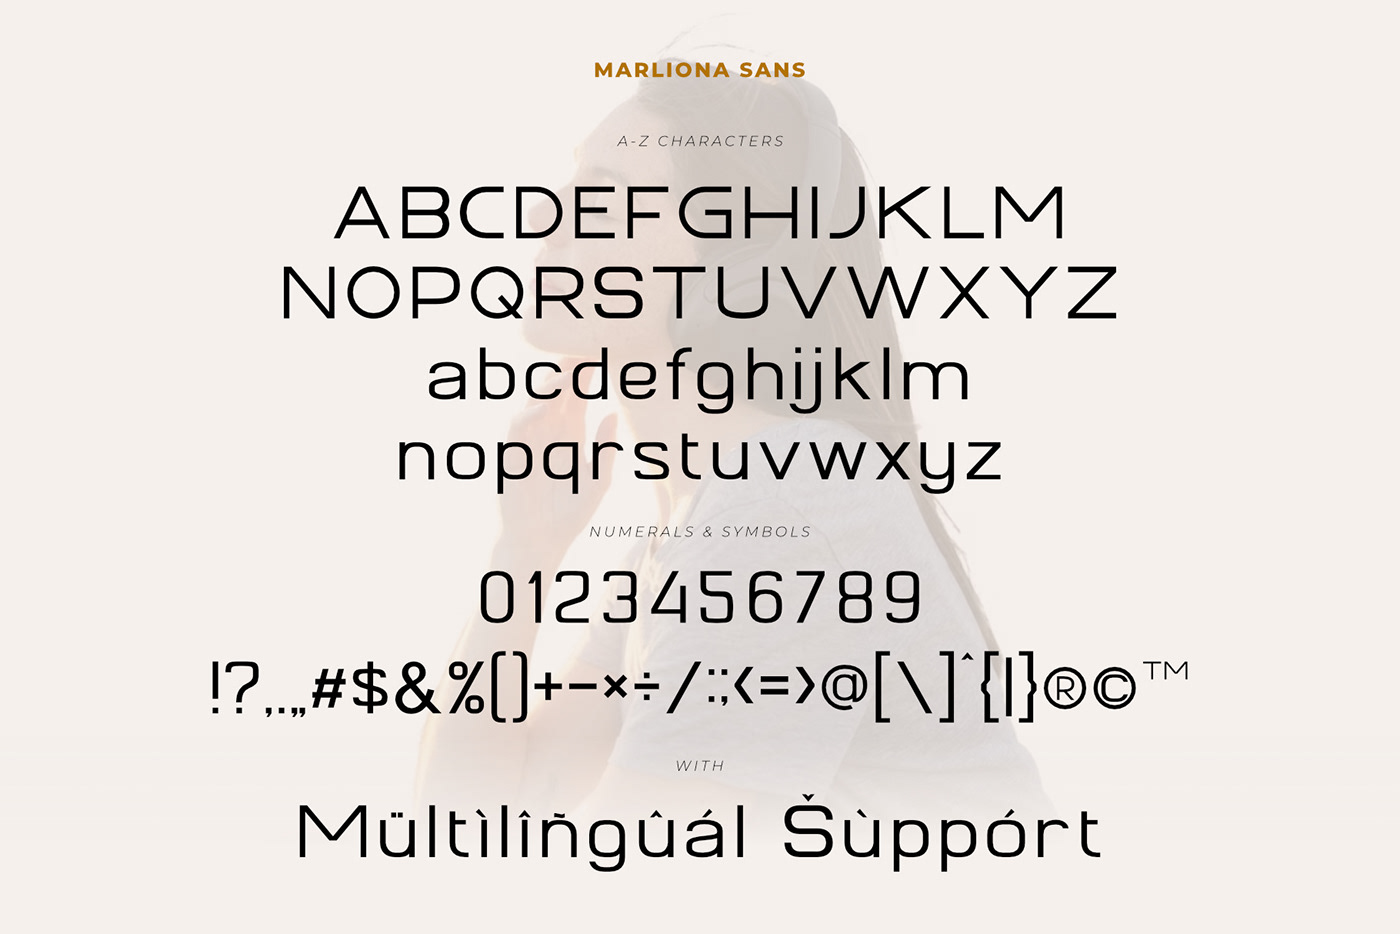 sans serif sans serif font modern font stylish font Script Font signature font branding font classy font business font font duo